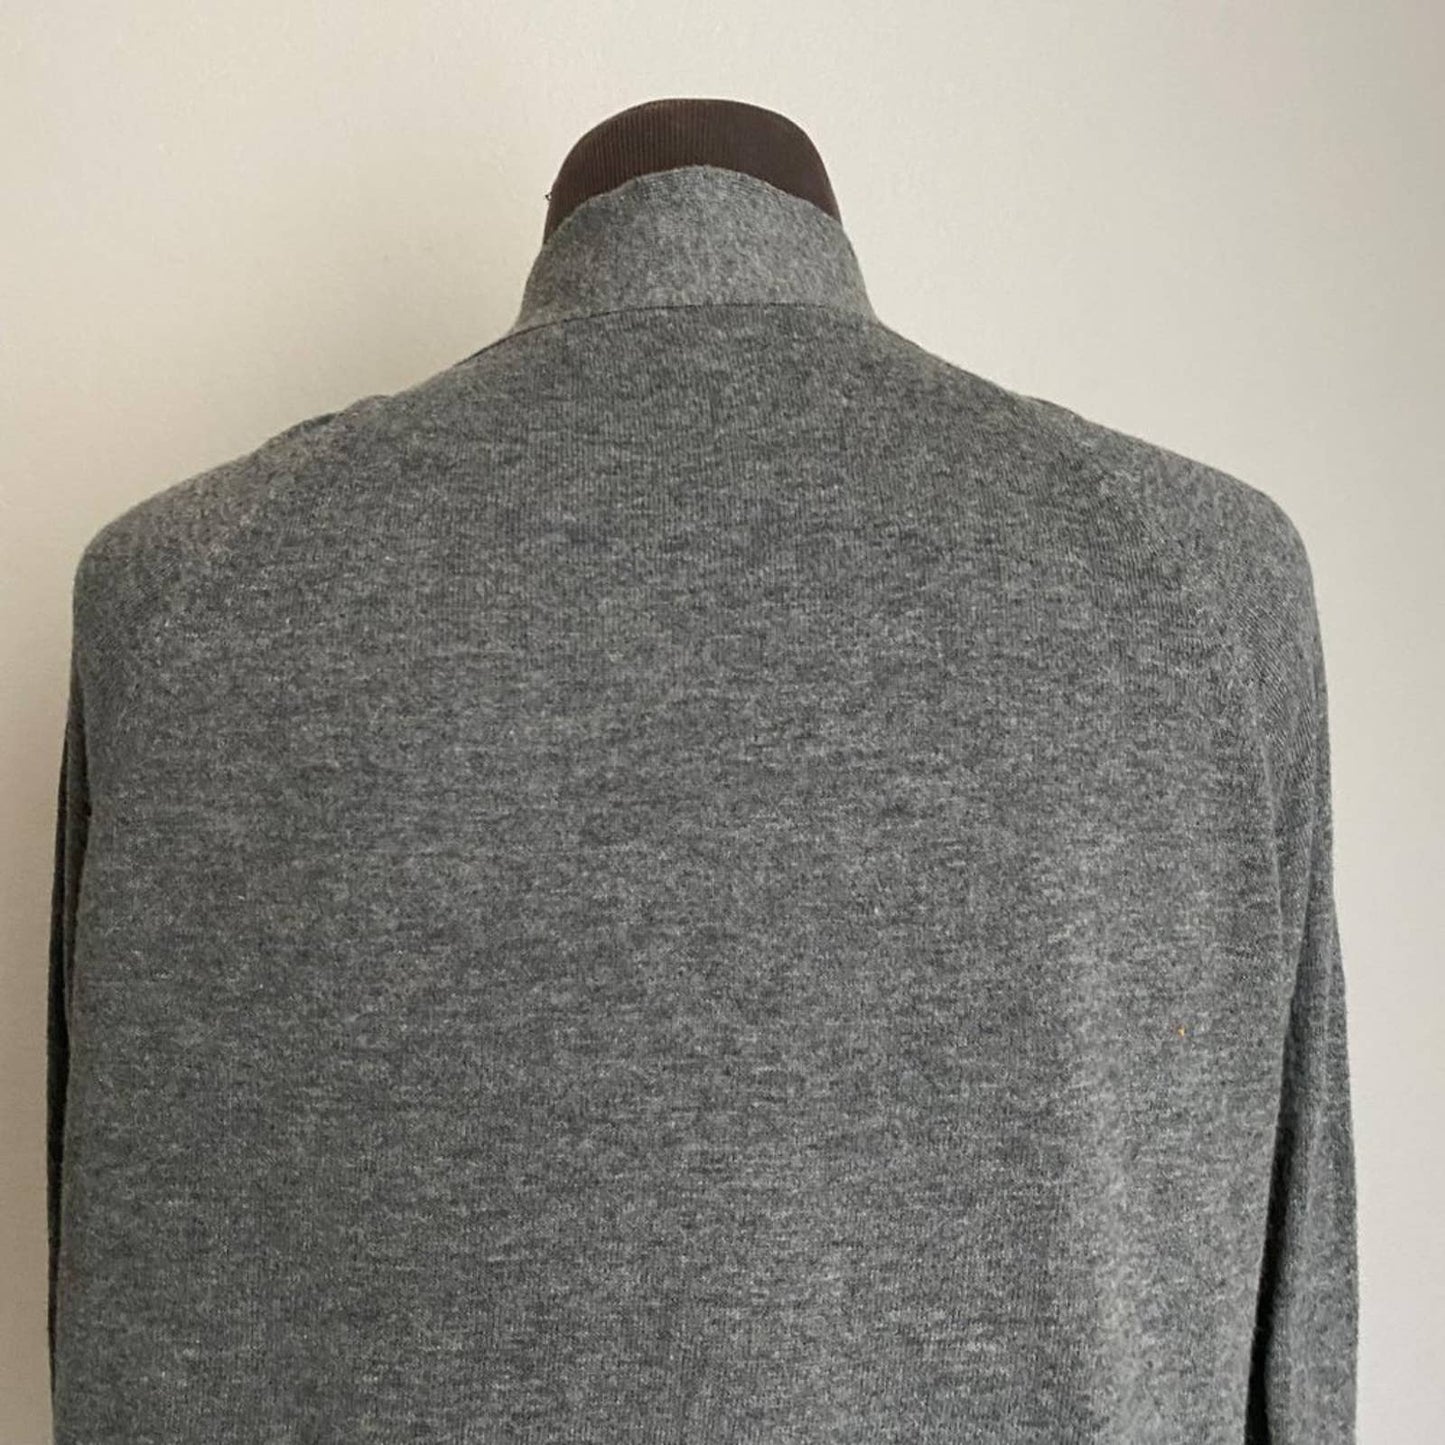 Express sz M 100% cotton Long sleeve open sweater cardigan